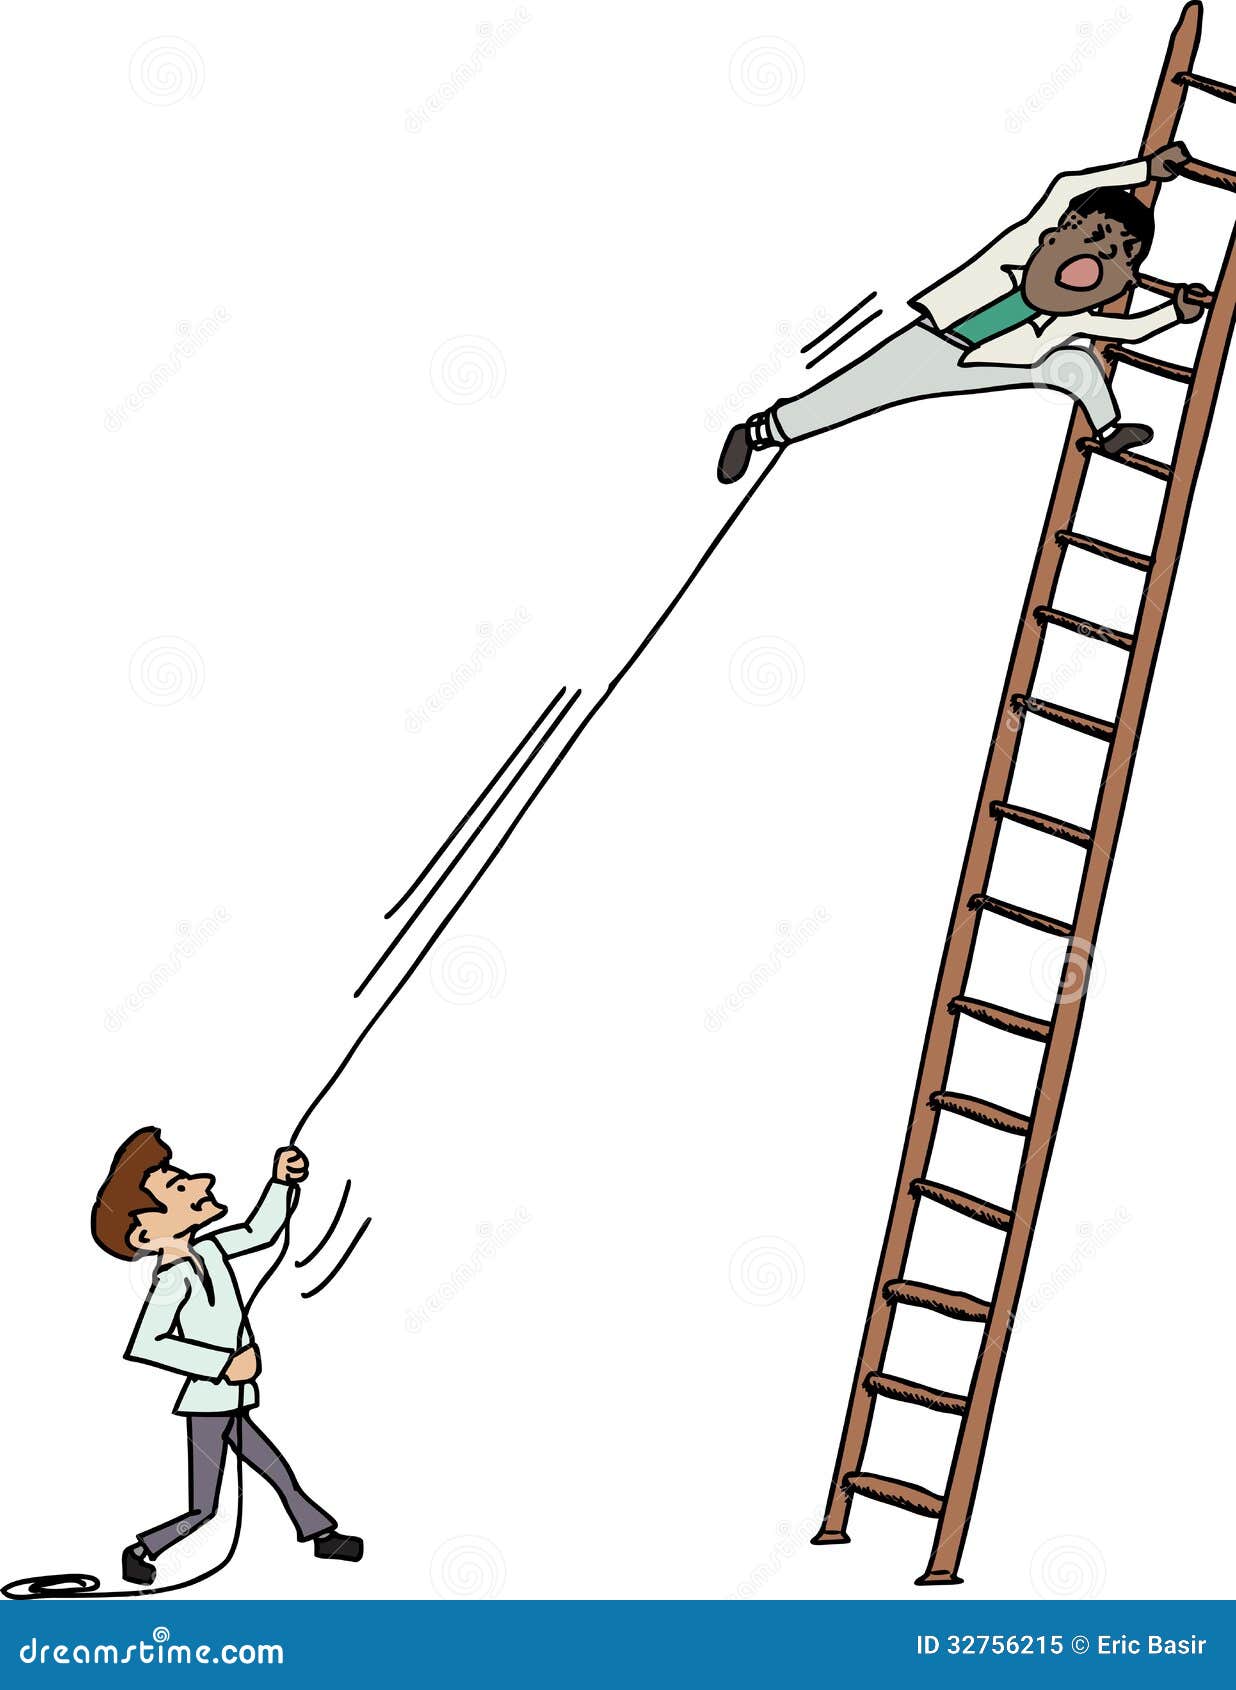 clipart man falling off ladder - photo #21